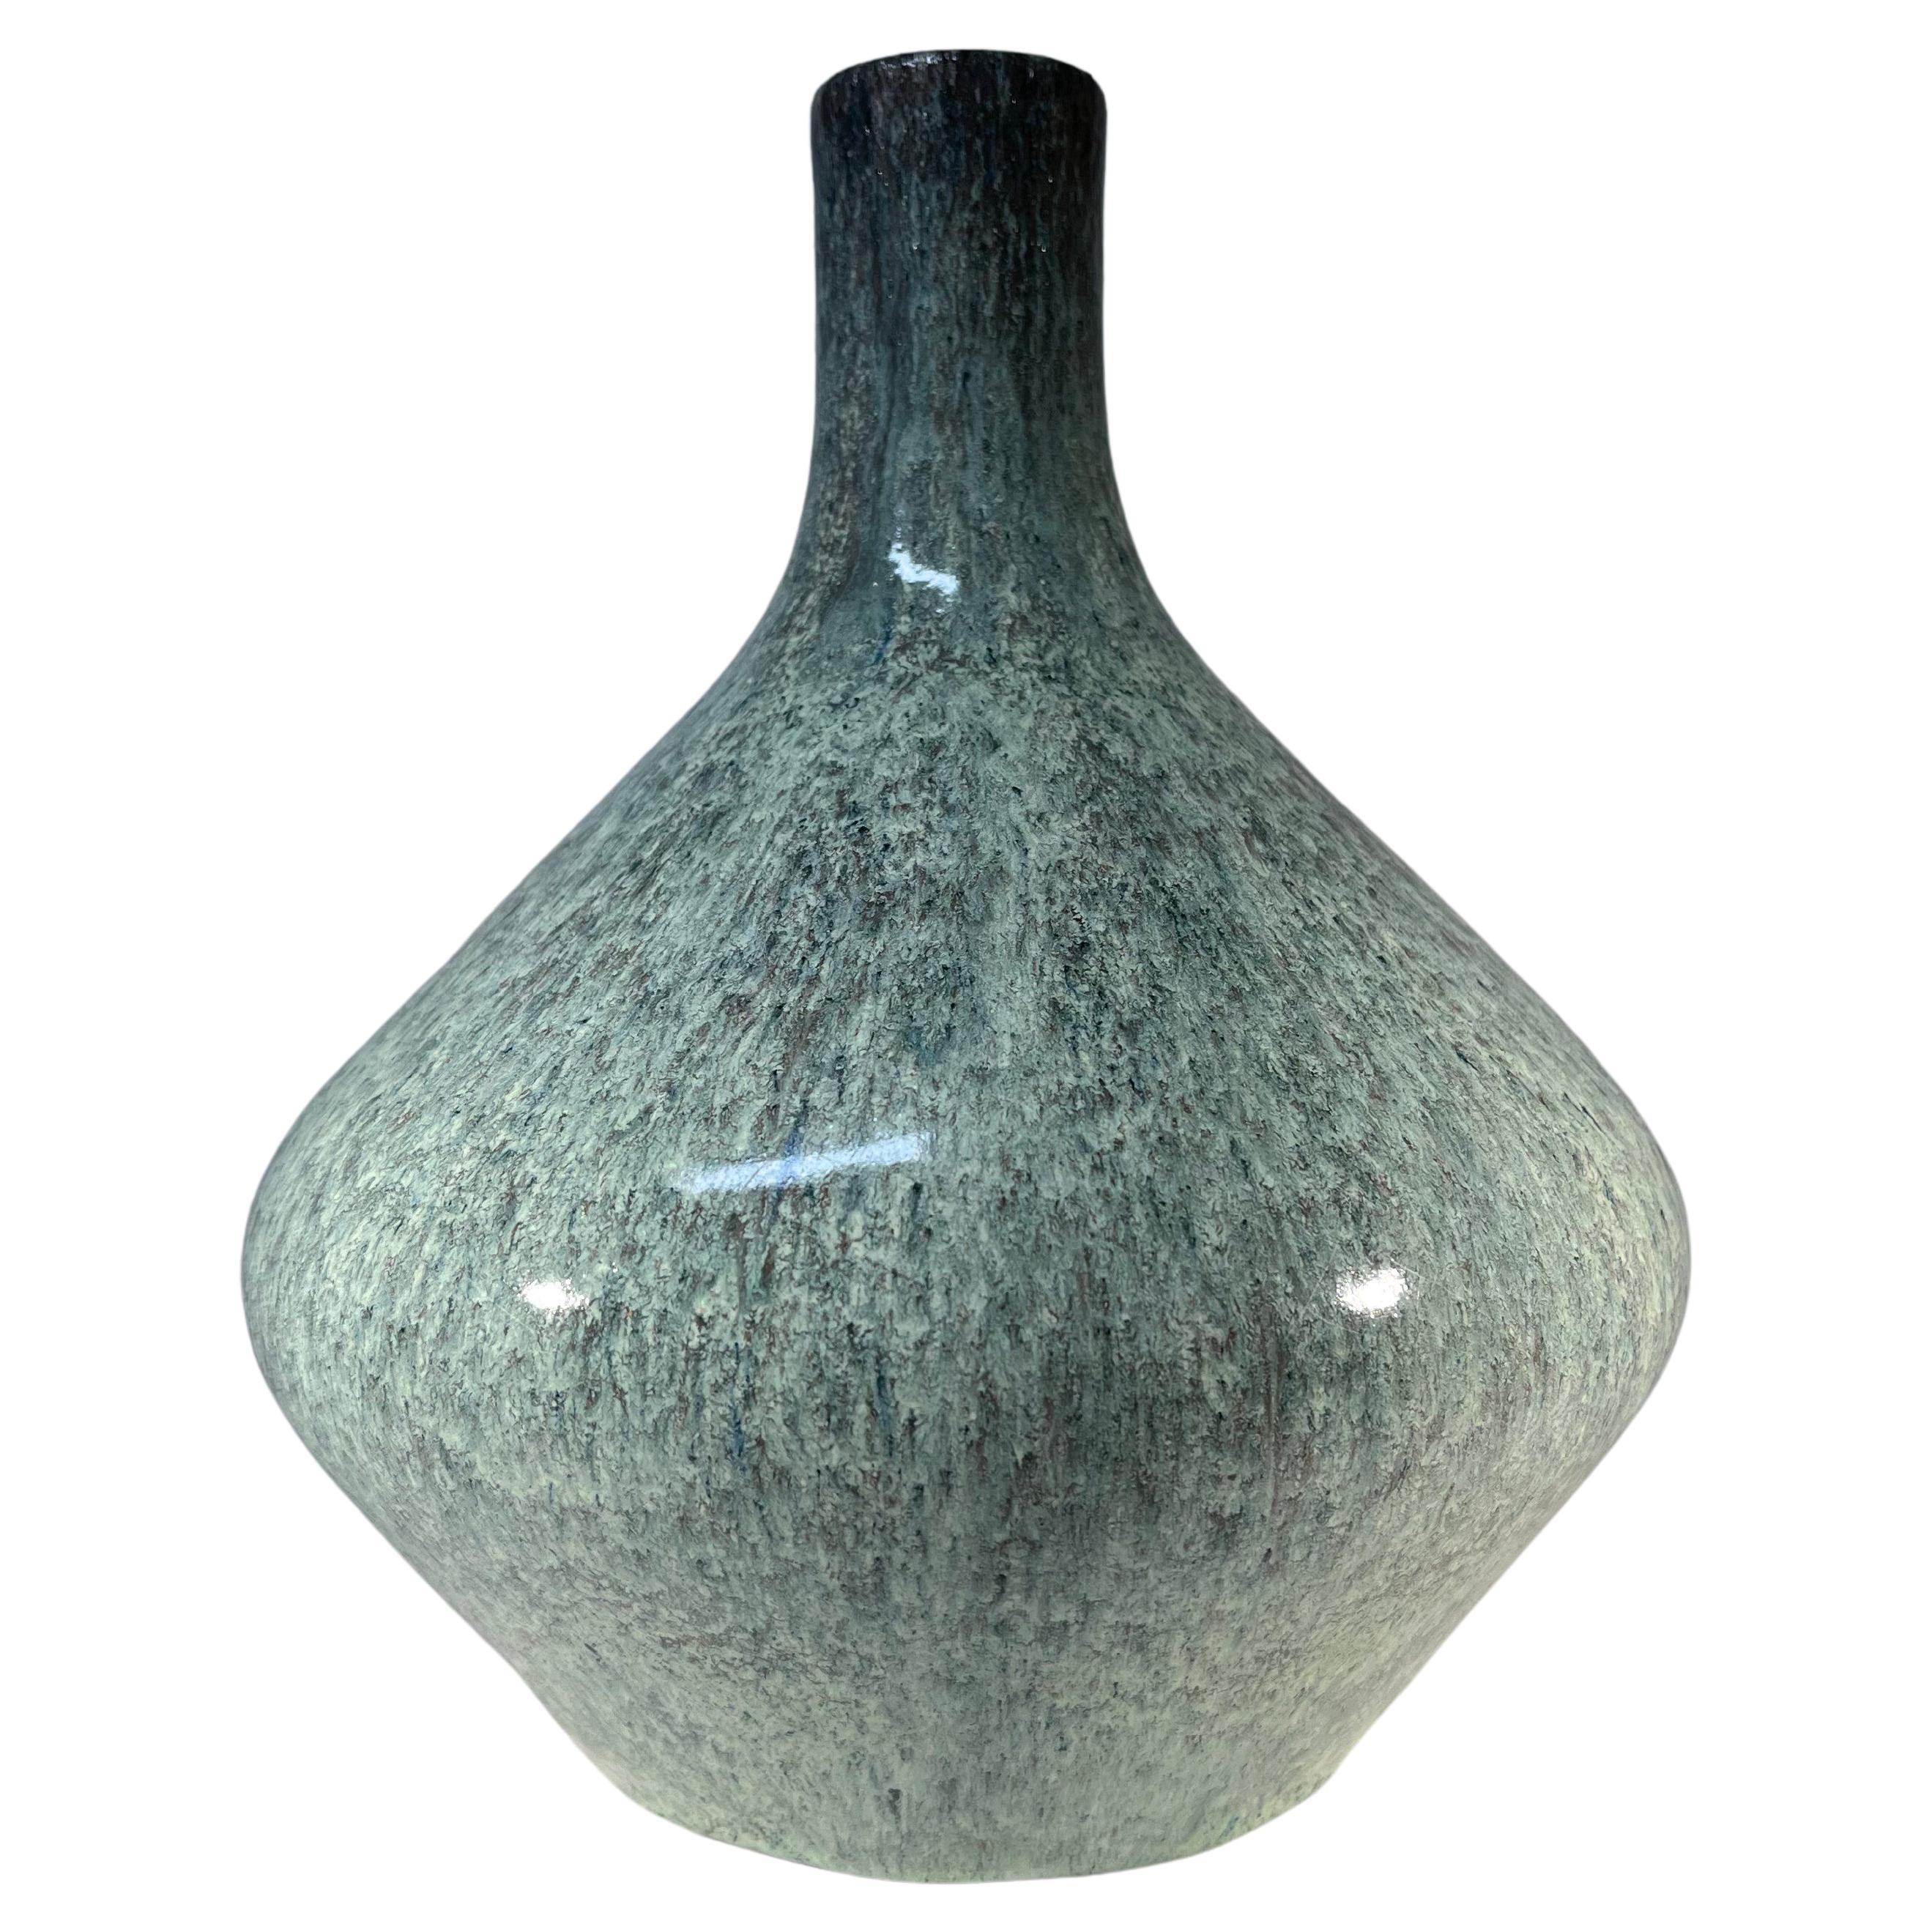 Teardrop By Accolay, Duck Egg Blue Mottled Glaze Ceramic Vase, France 1960's For Sale